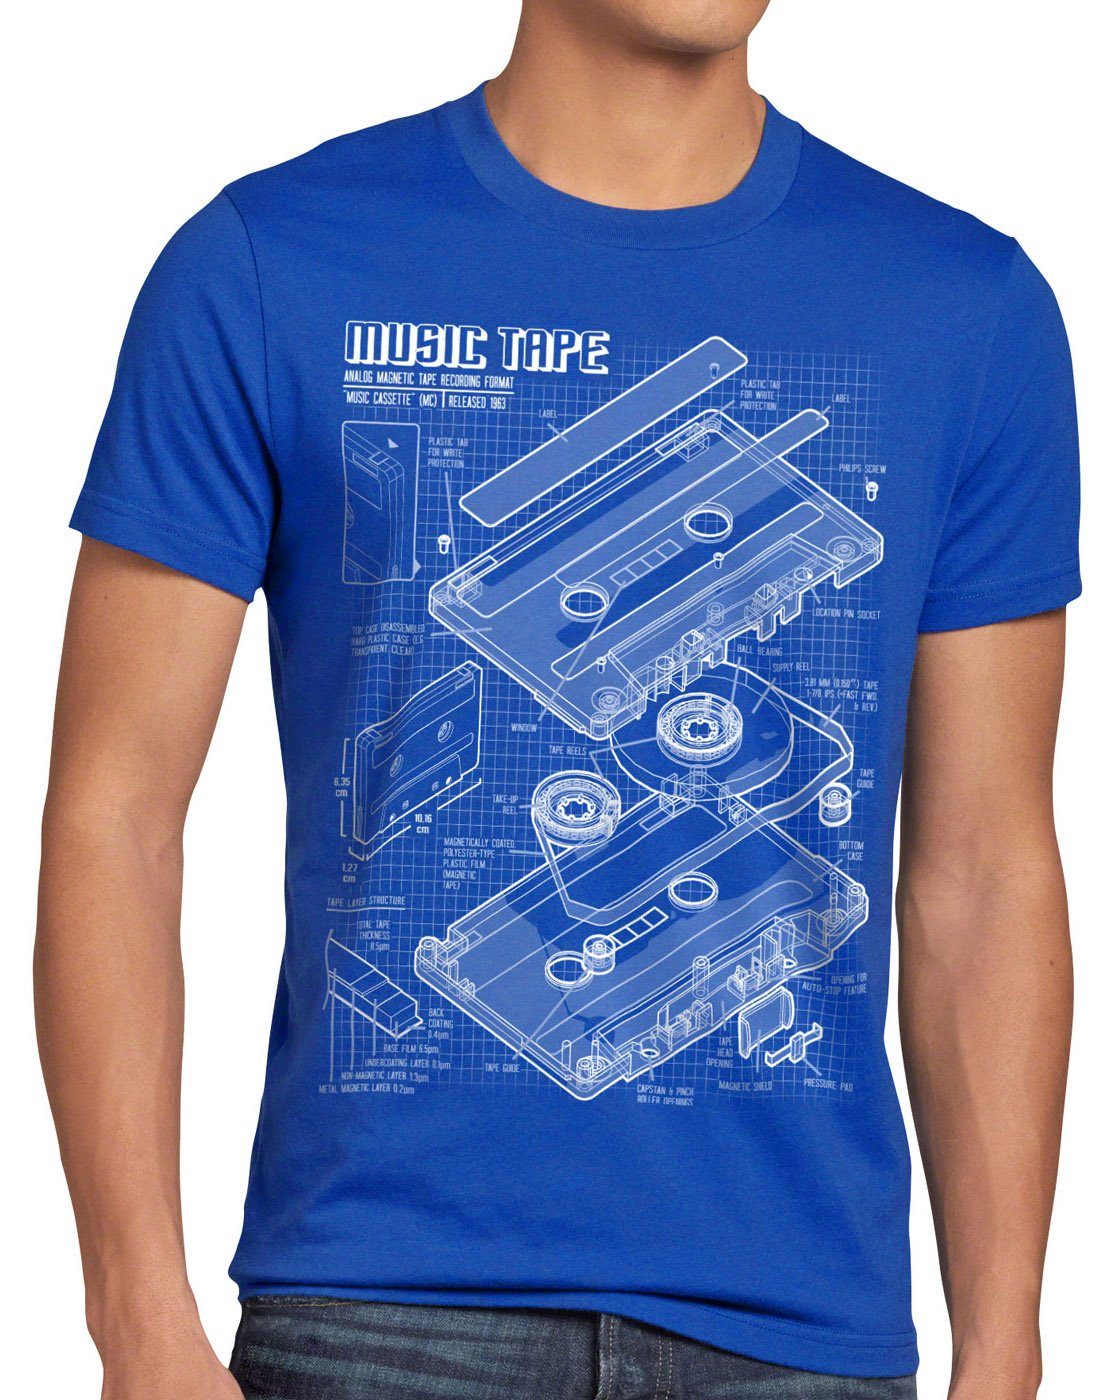 Print-Shirt analog style3 turntable Kassette retro ndw blau T-Shirt MC TAPE disco DJ Herren musik disko